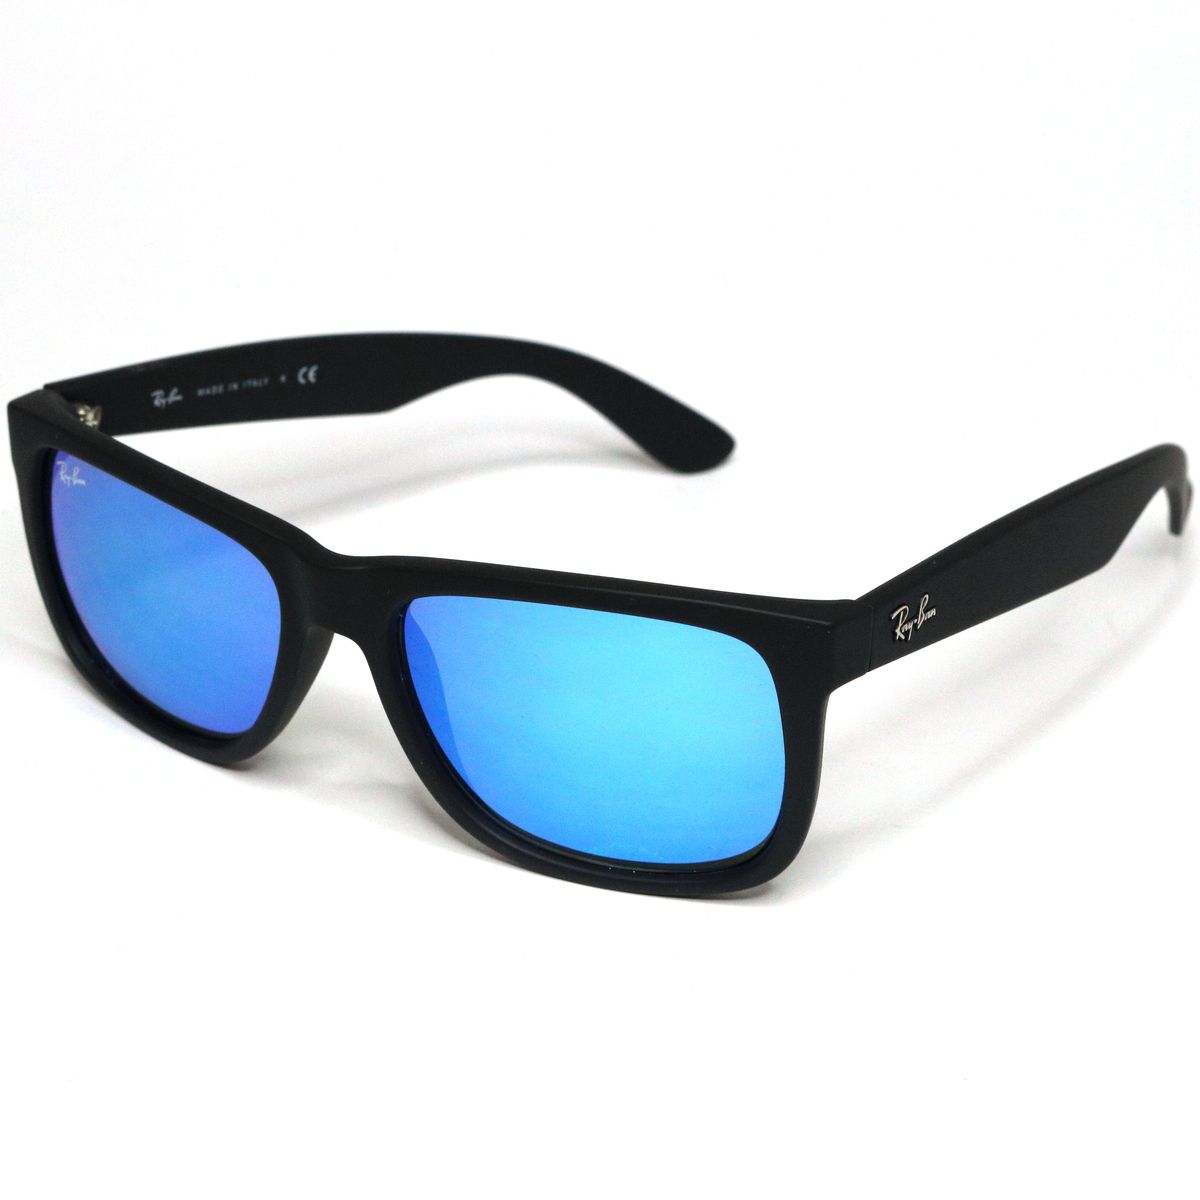 RB4165 Square Sunglasses 622 55 - size 55